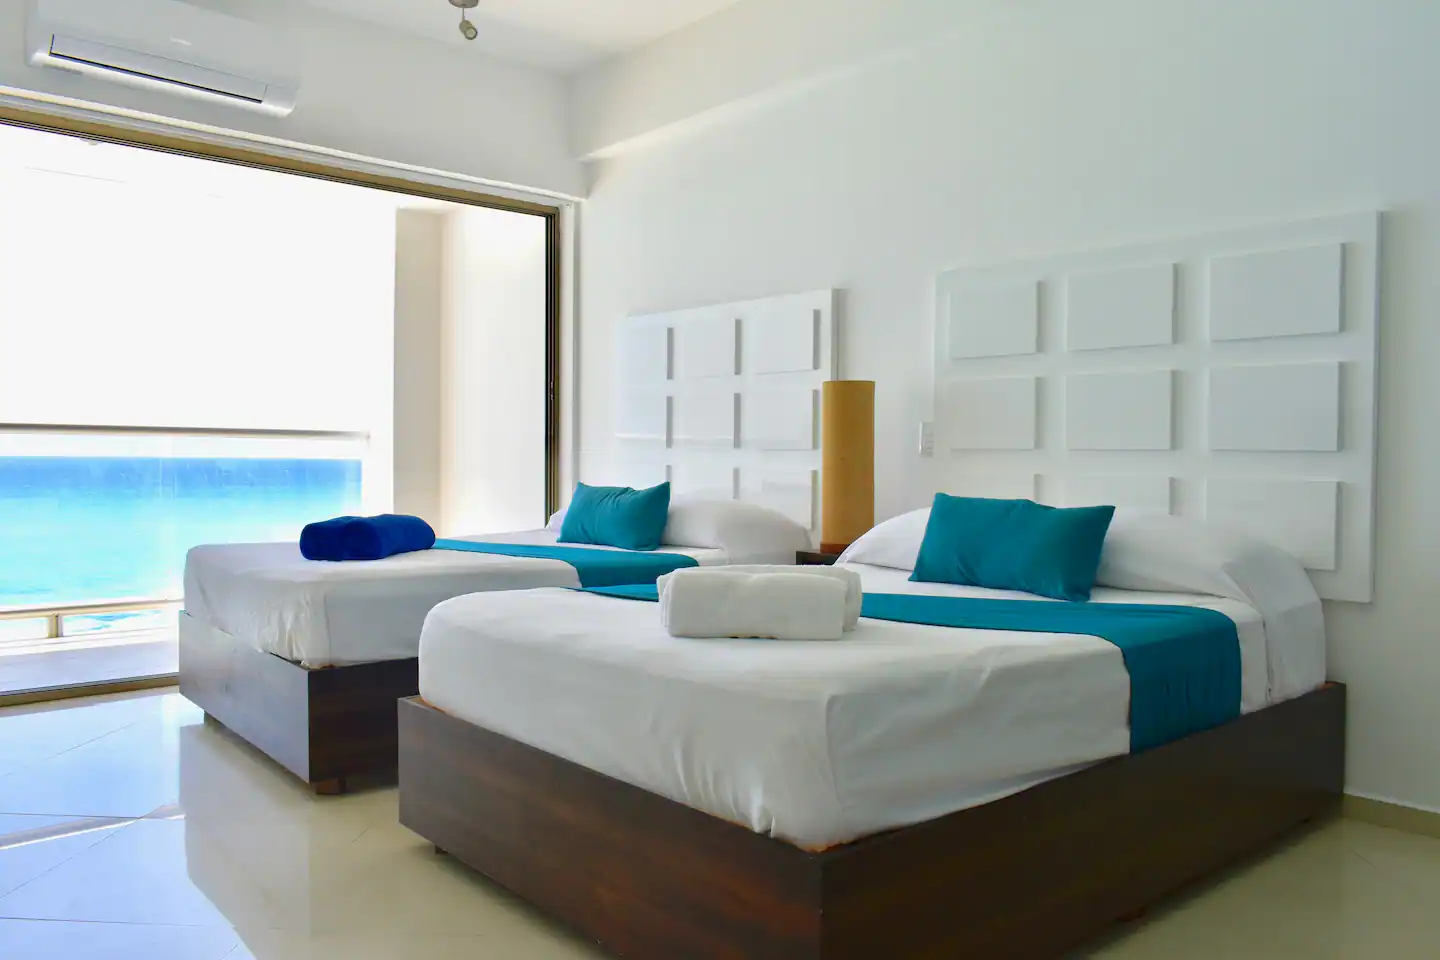 Loft vista Al Mar, one of the best Airbnbs in Cancun